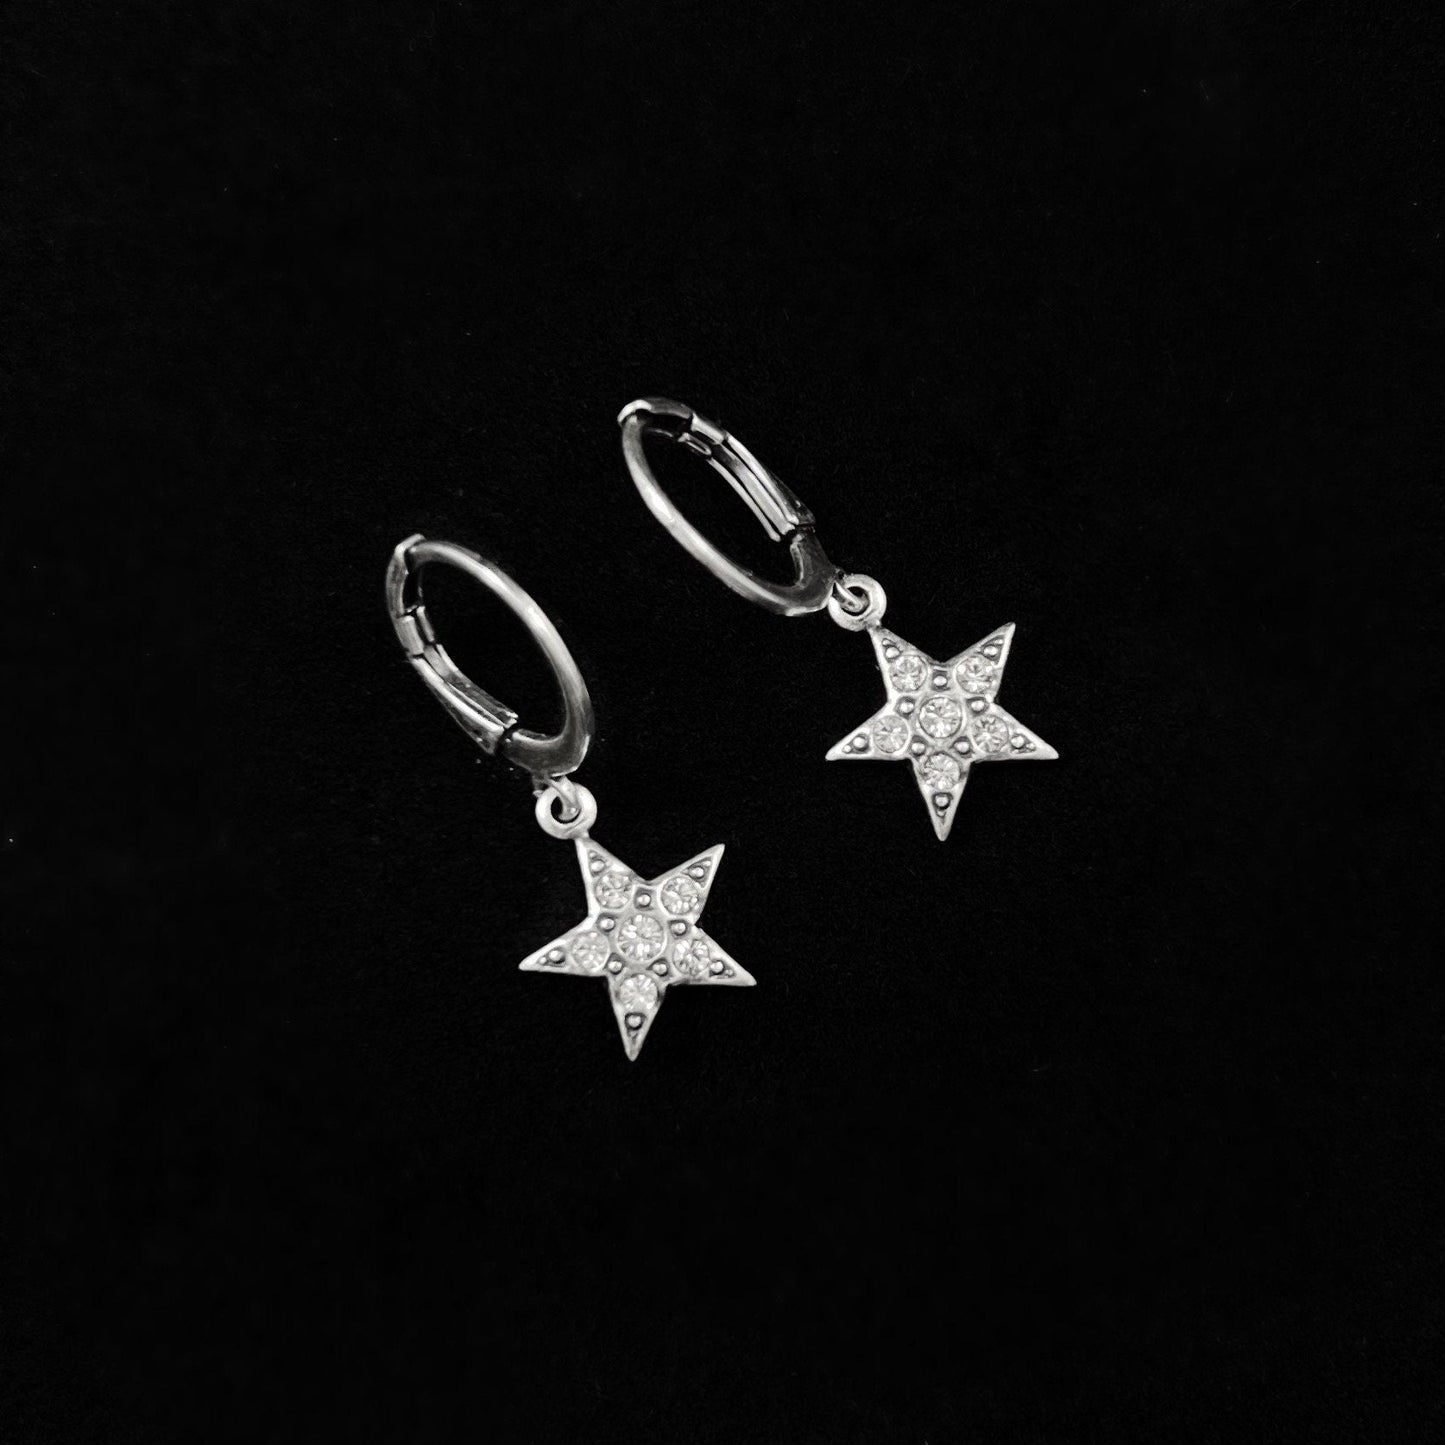 Star Swarovski Crystal Drop Earrings with Crystal Detailing- La Vie Parisienne by Catherine Popesco